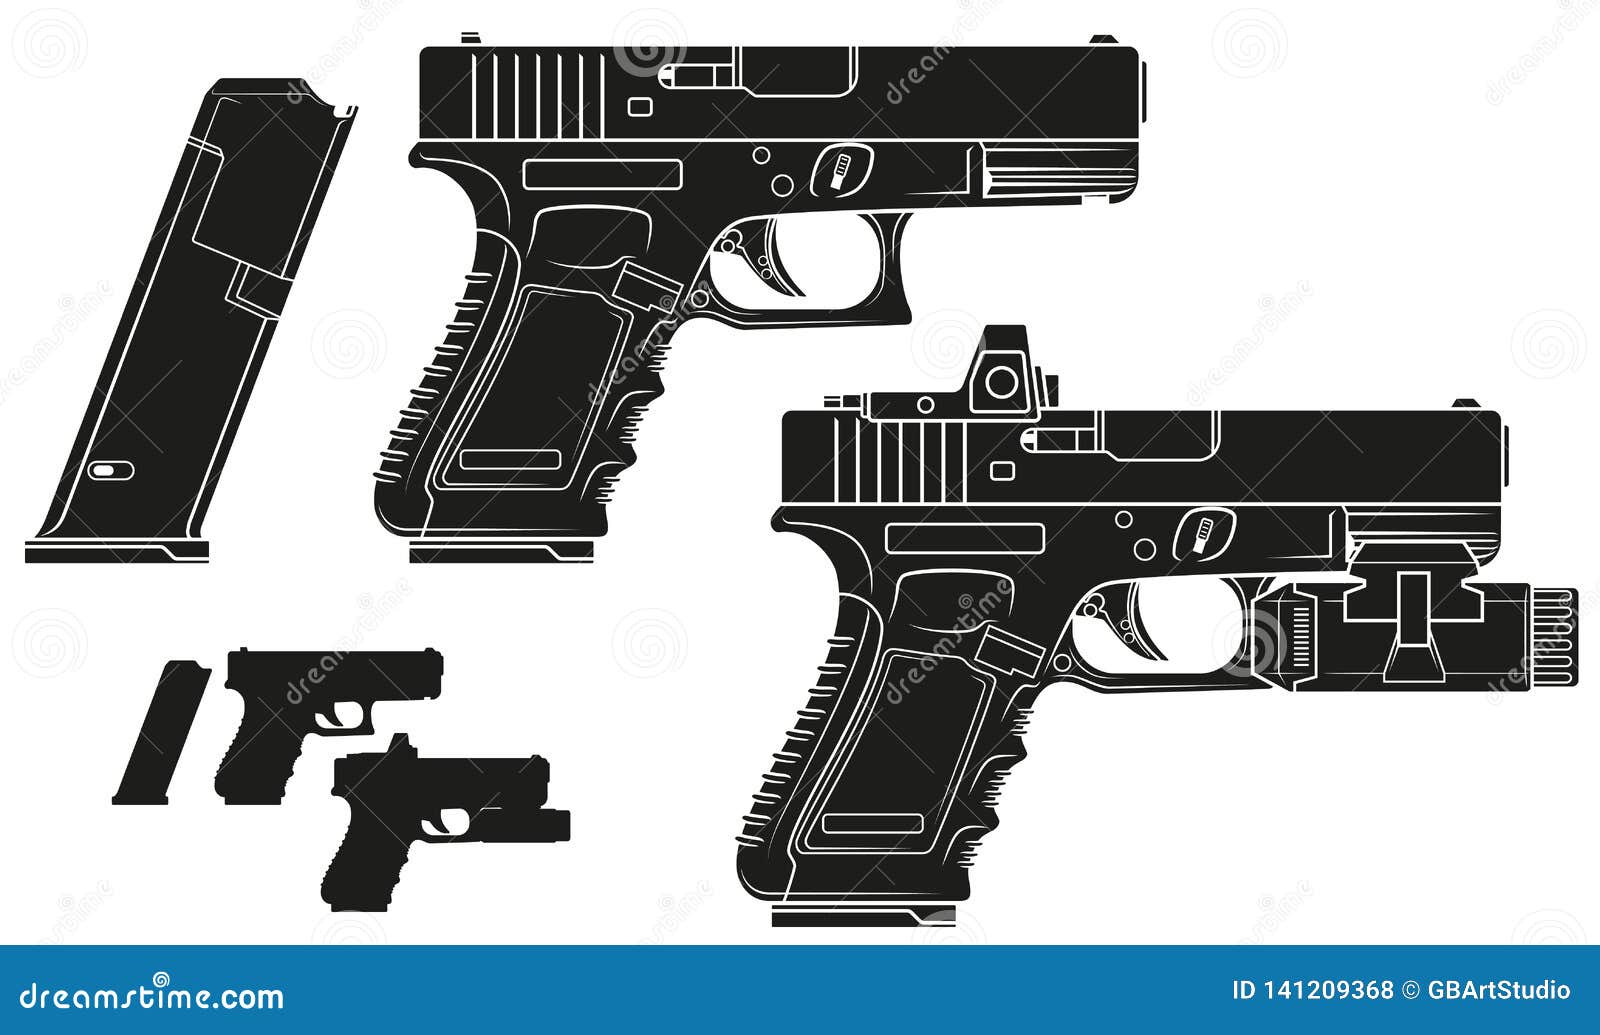 graphic silhouette handgun pistol with ammo clip